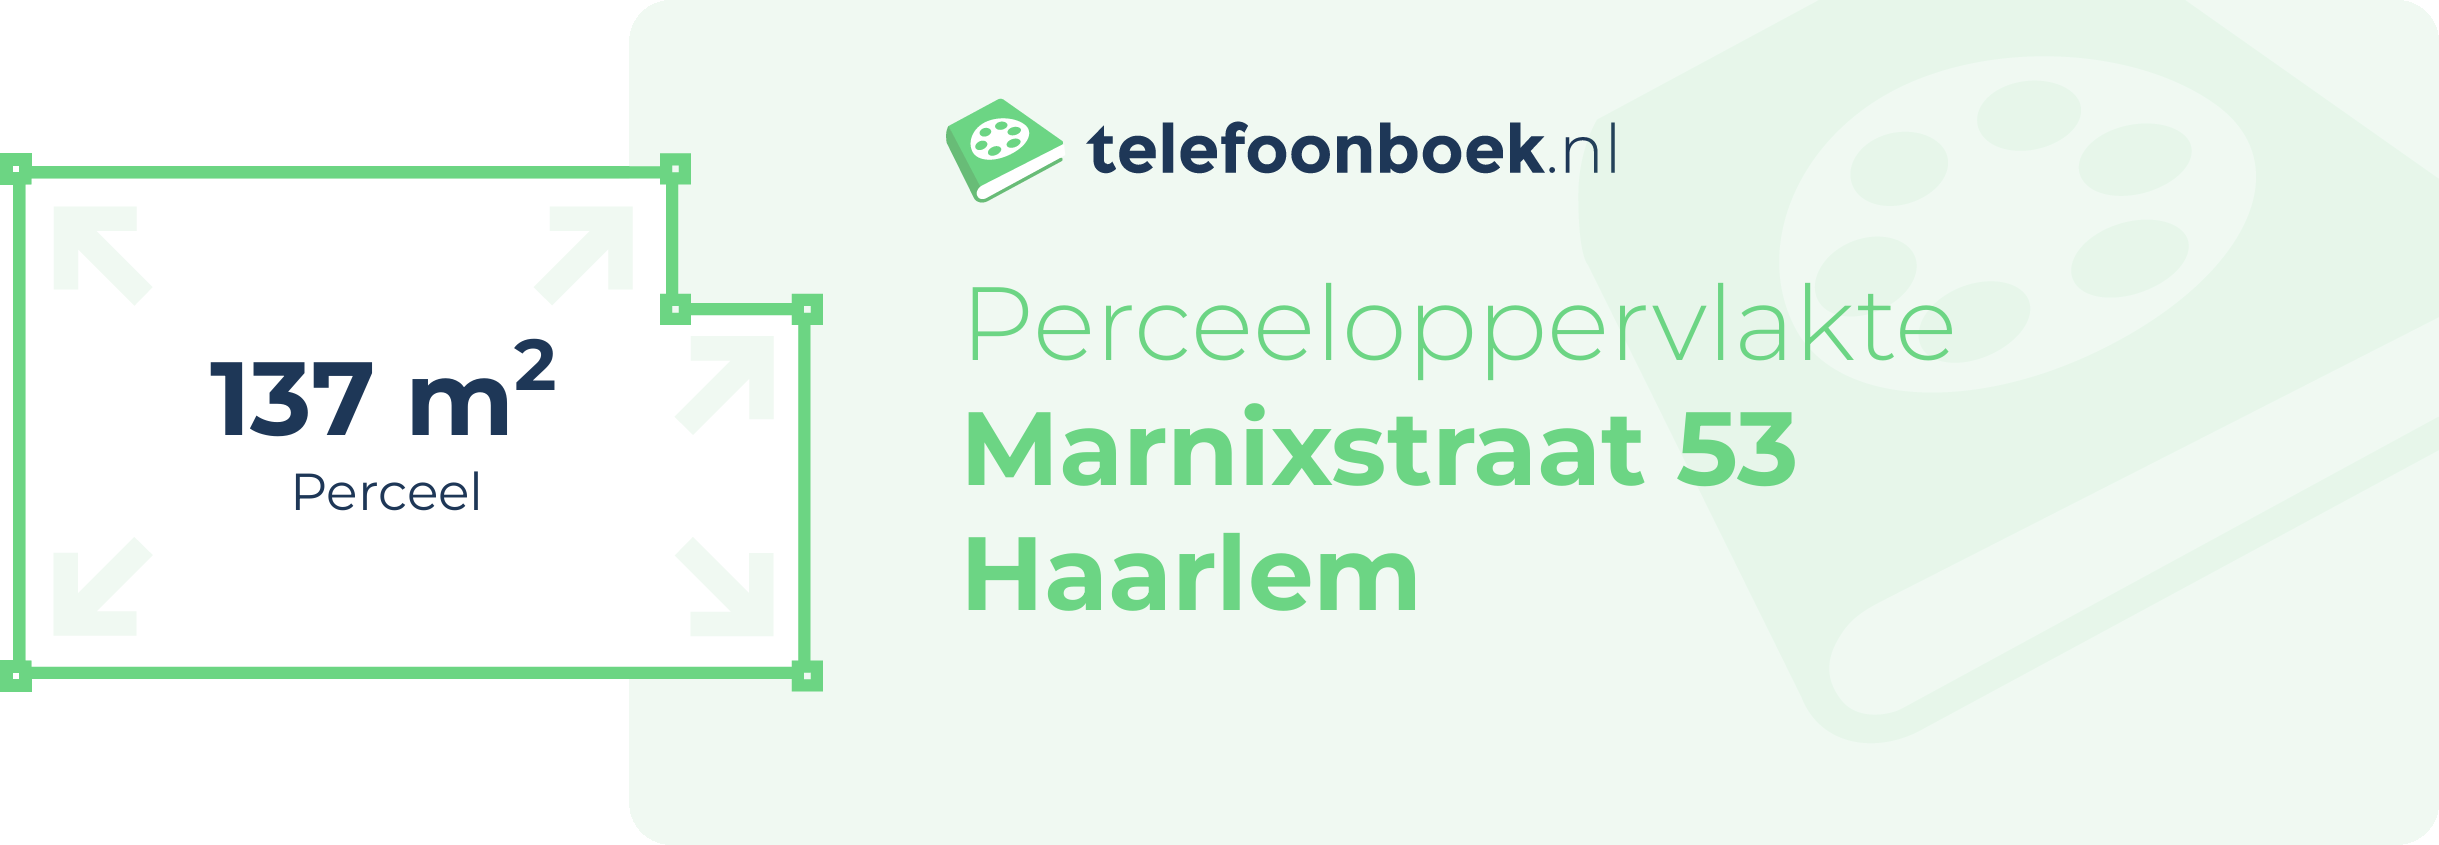 Perceeloppervlakte Marnixstraat 53 Haarlem